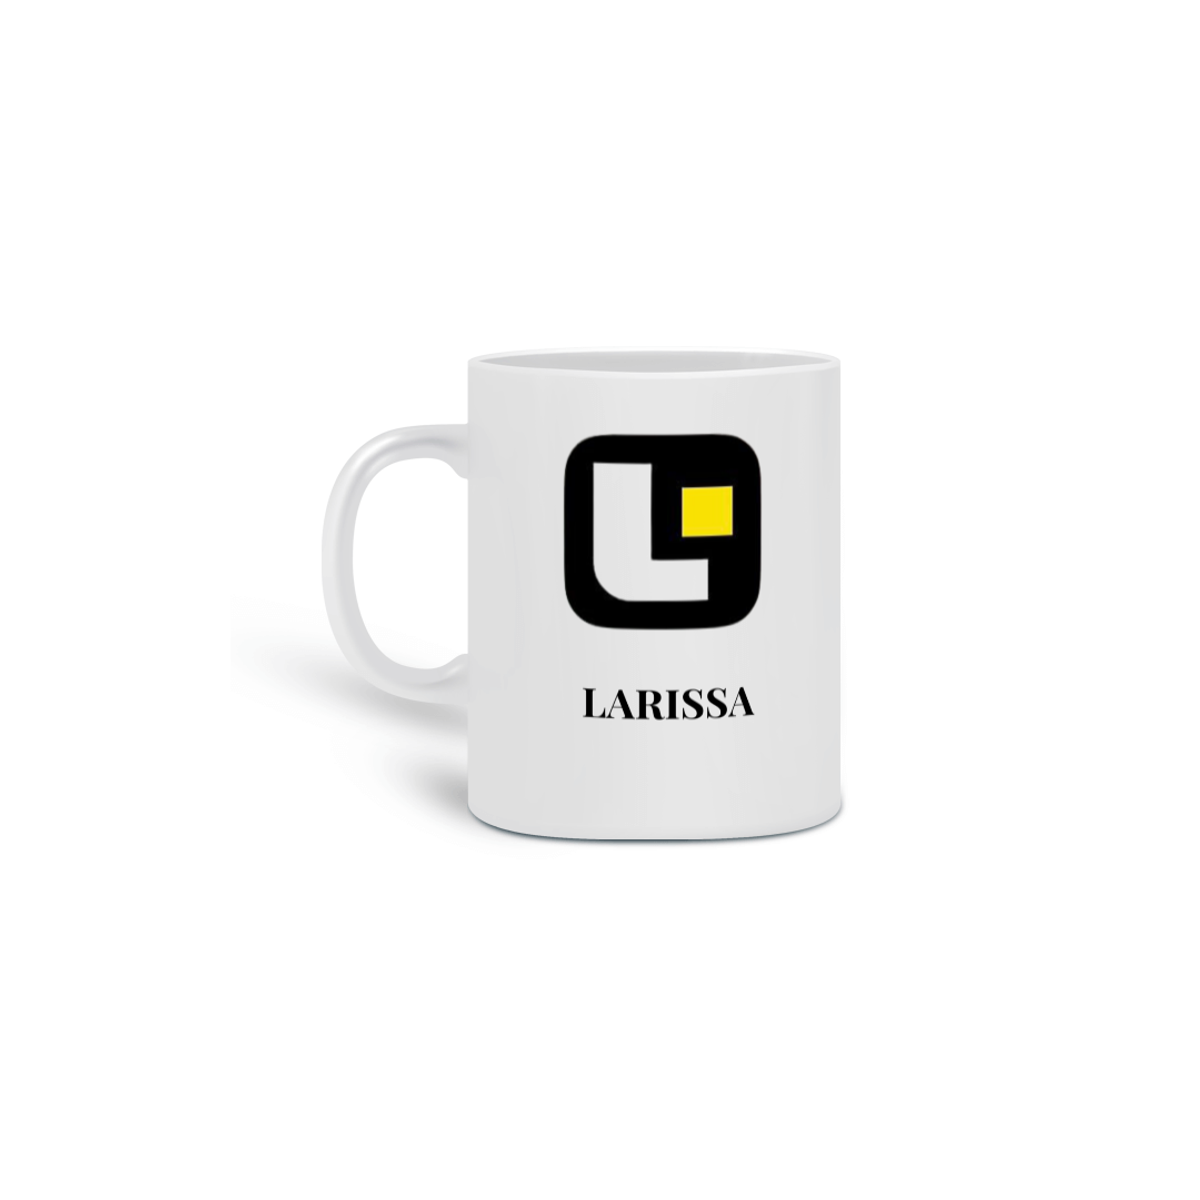 Nome do produto: LARISSA